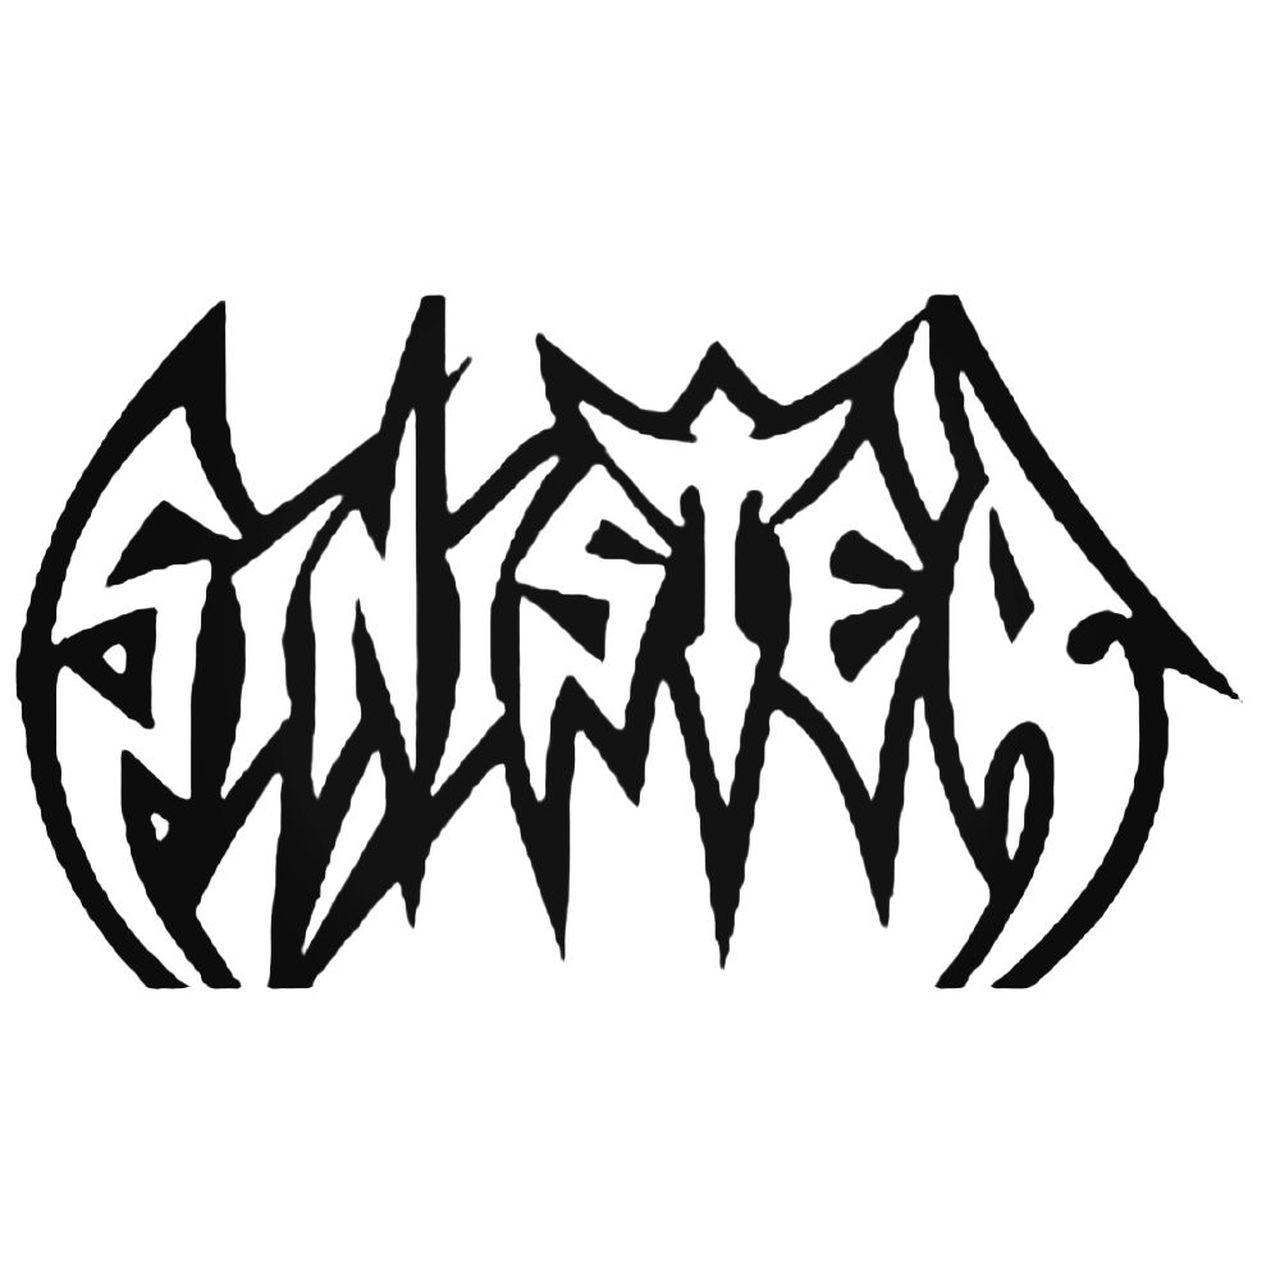 Sinister Logo - Sinister Vinyl Decal Band Logo Vinyl Decal